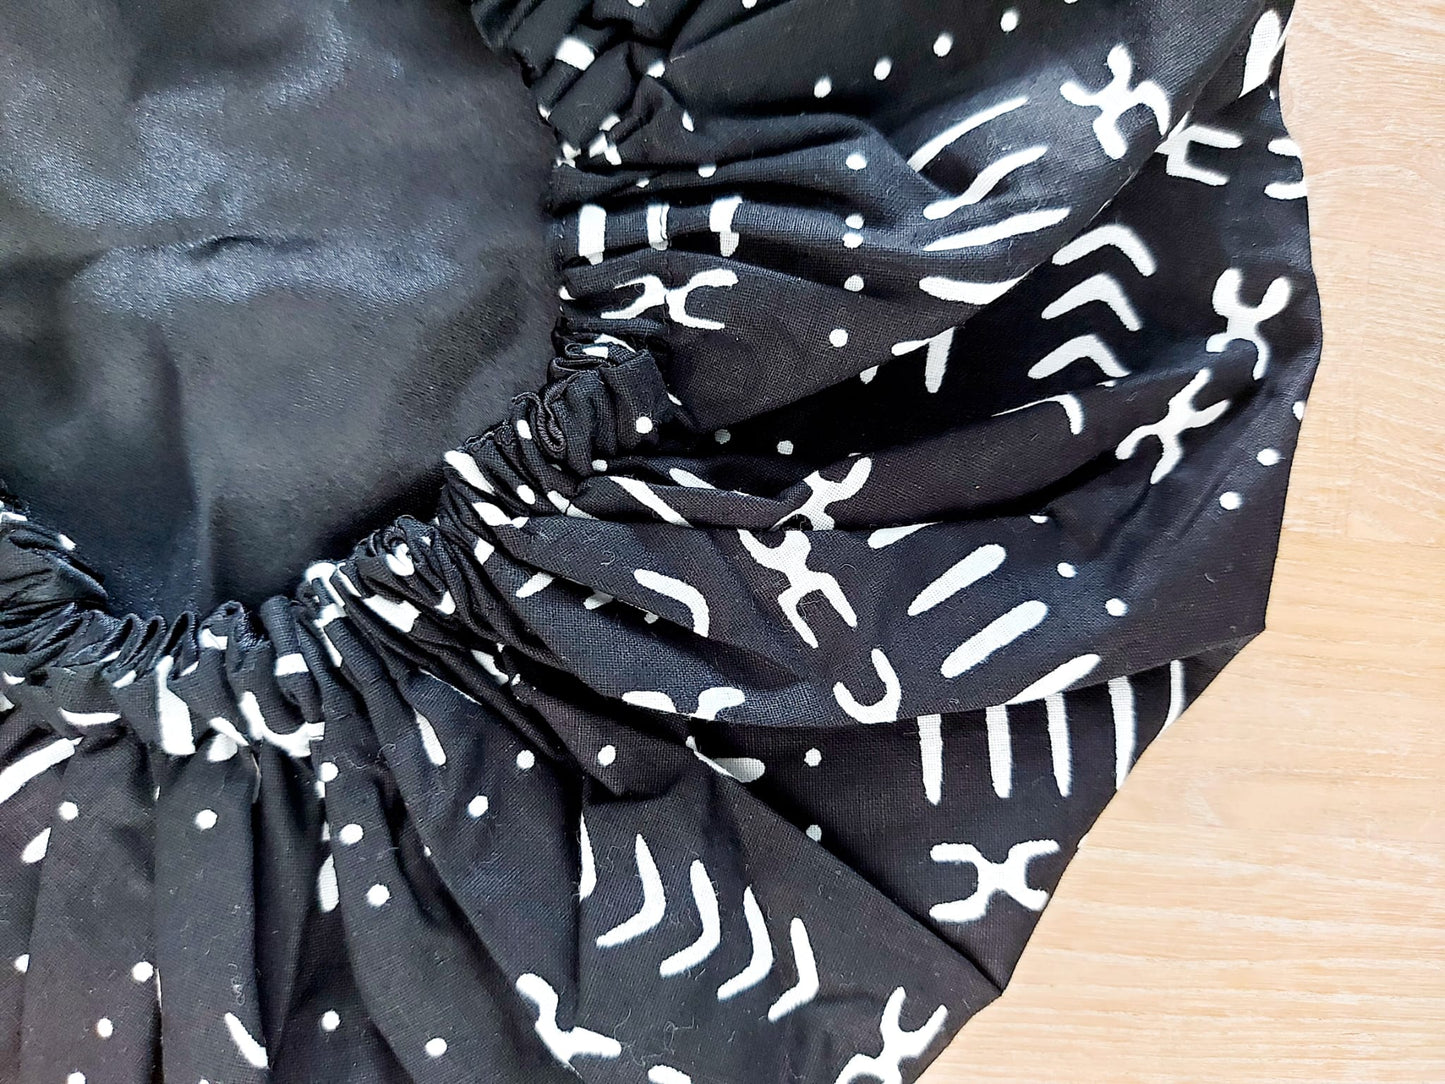 Large African "Mudcloth" Print Women Satin Lined Sleep Bonnet Cap | Sleeping Cap